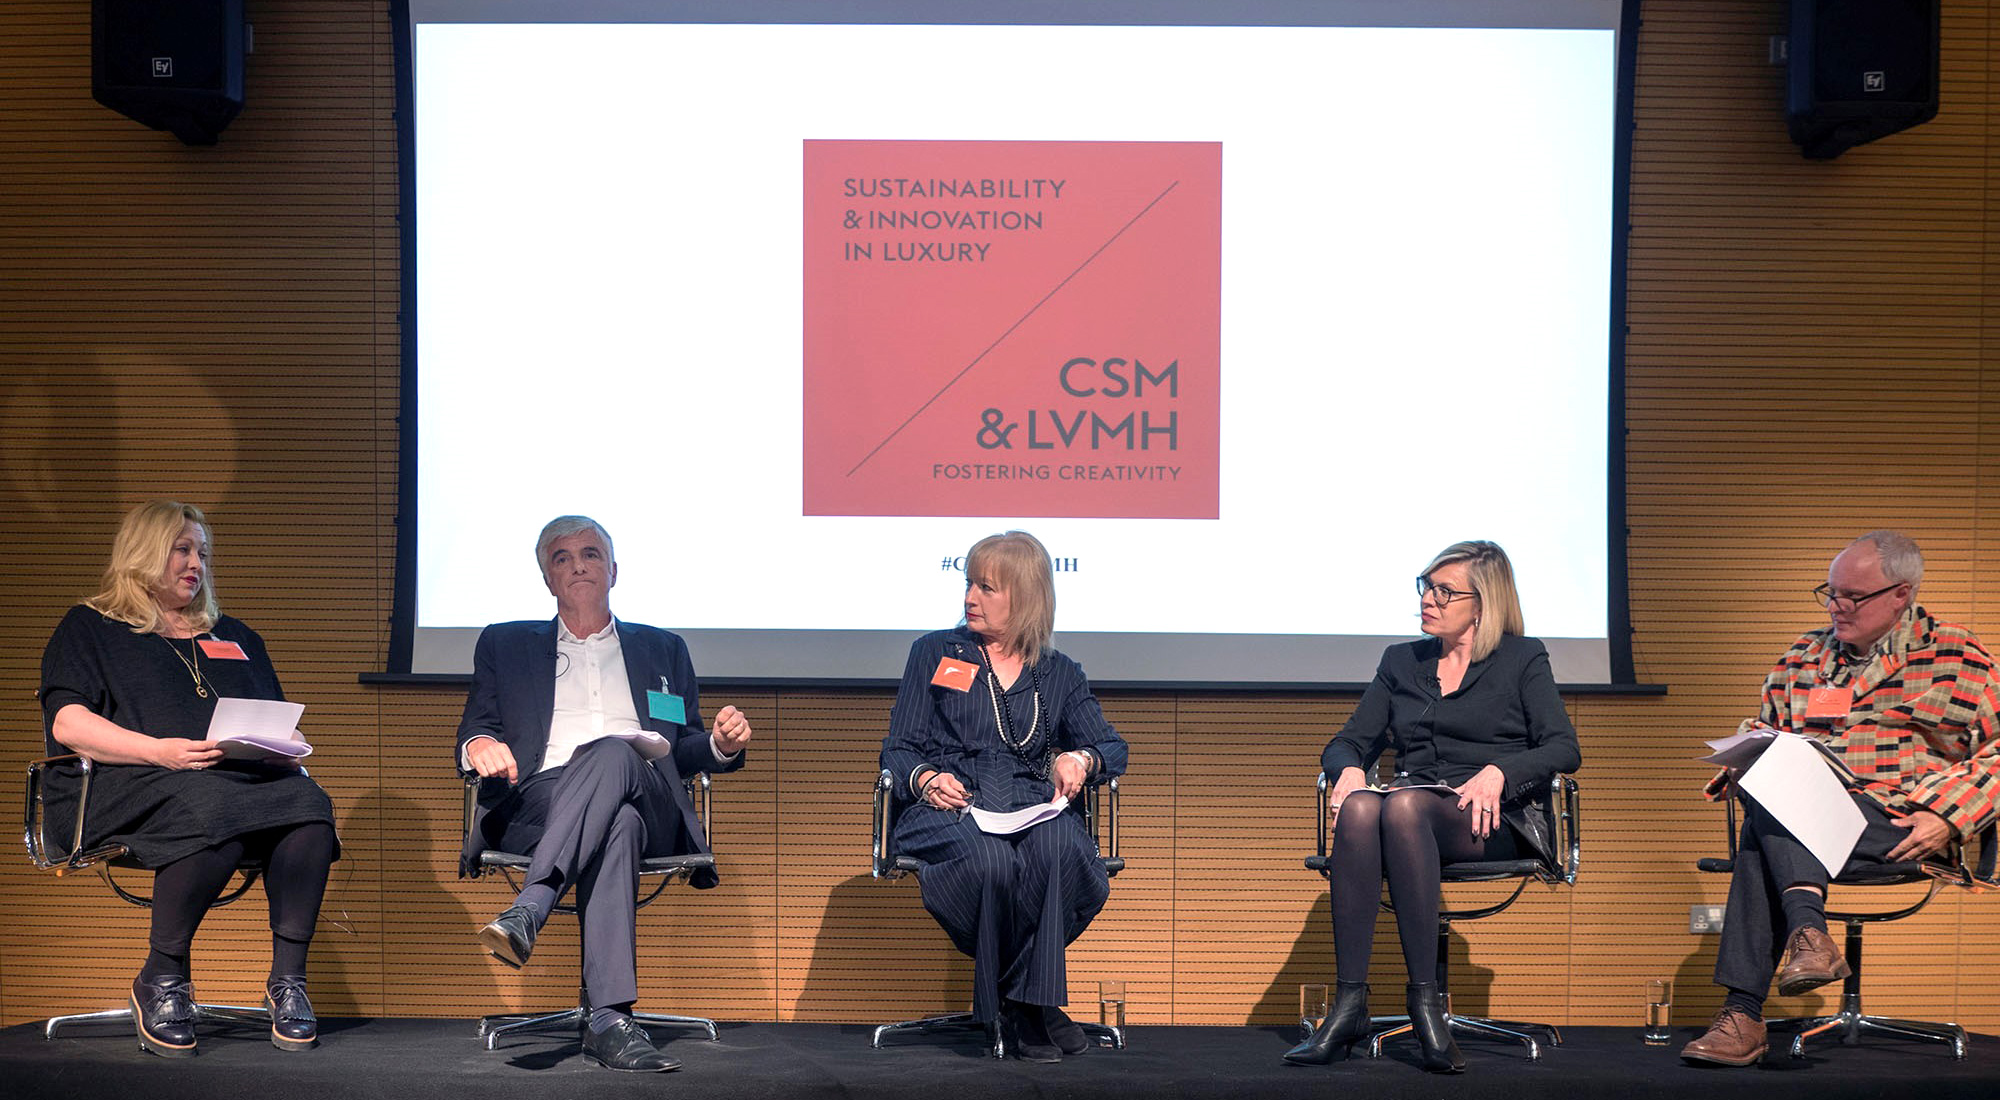 LVMH Unveils Its Future Maison des Métiers d'Excellence Supporting  Long-Term Talent Ecosystem — Anne of Carversville